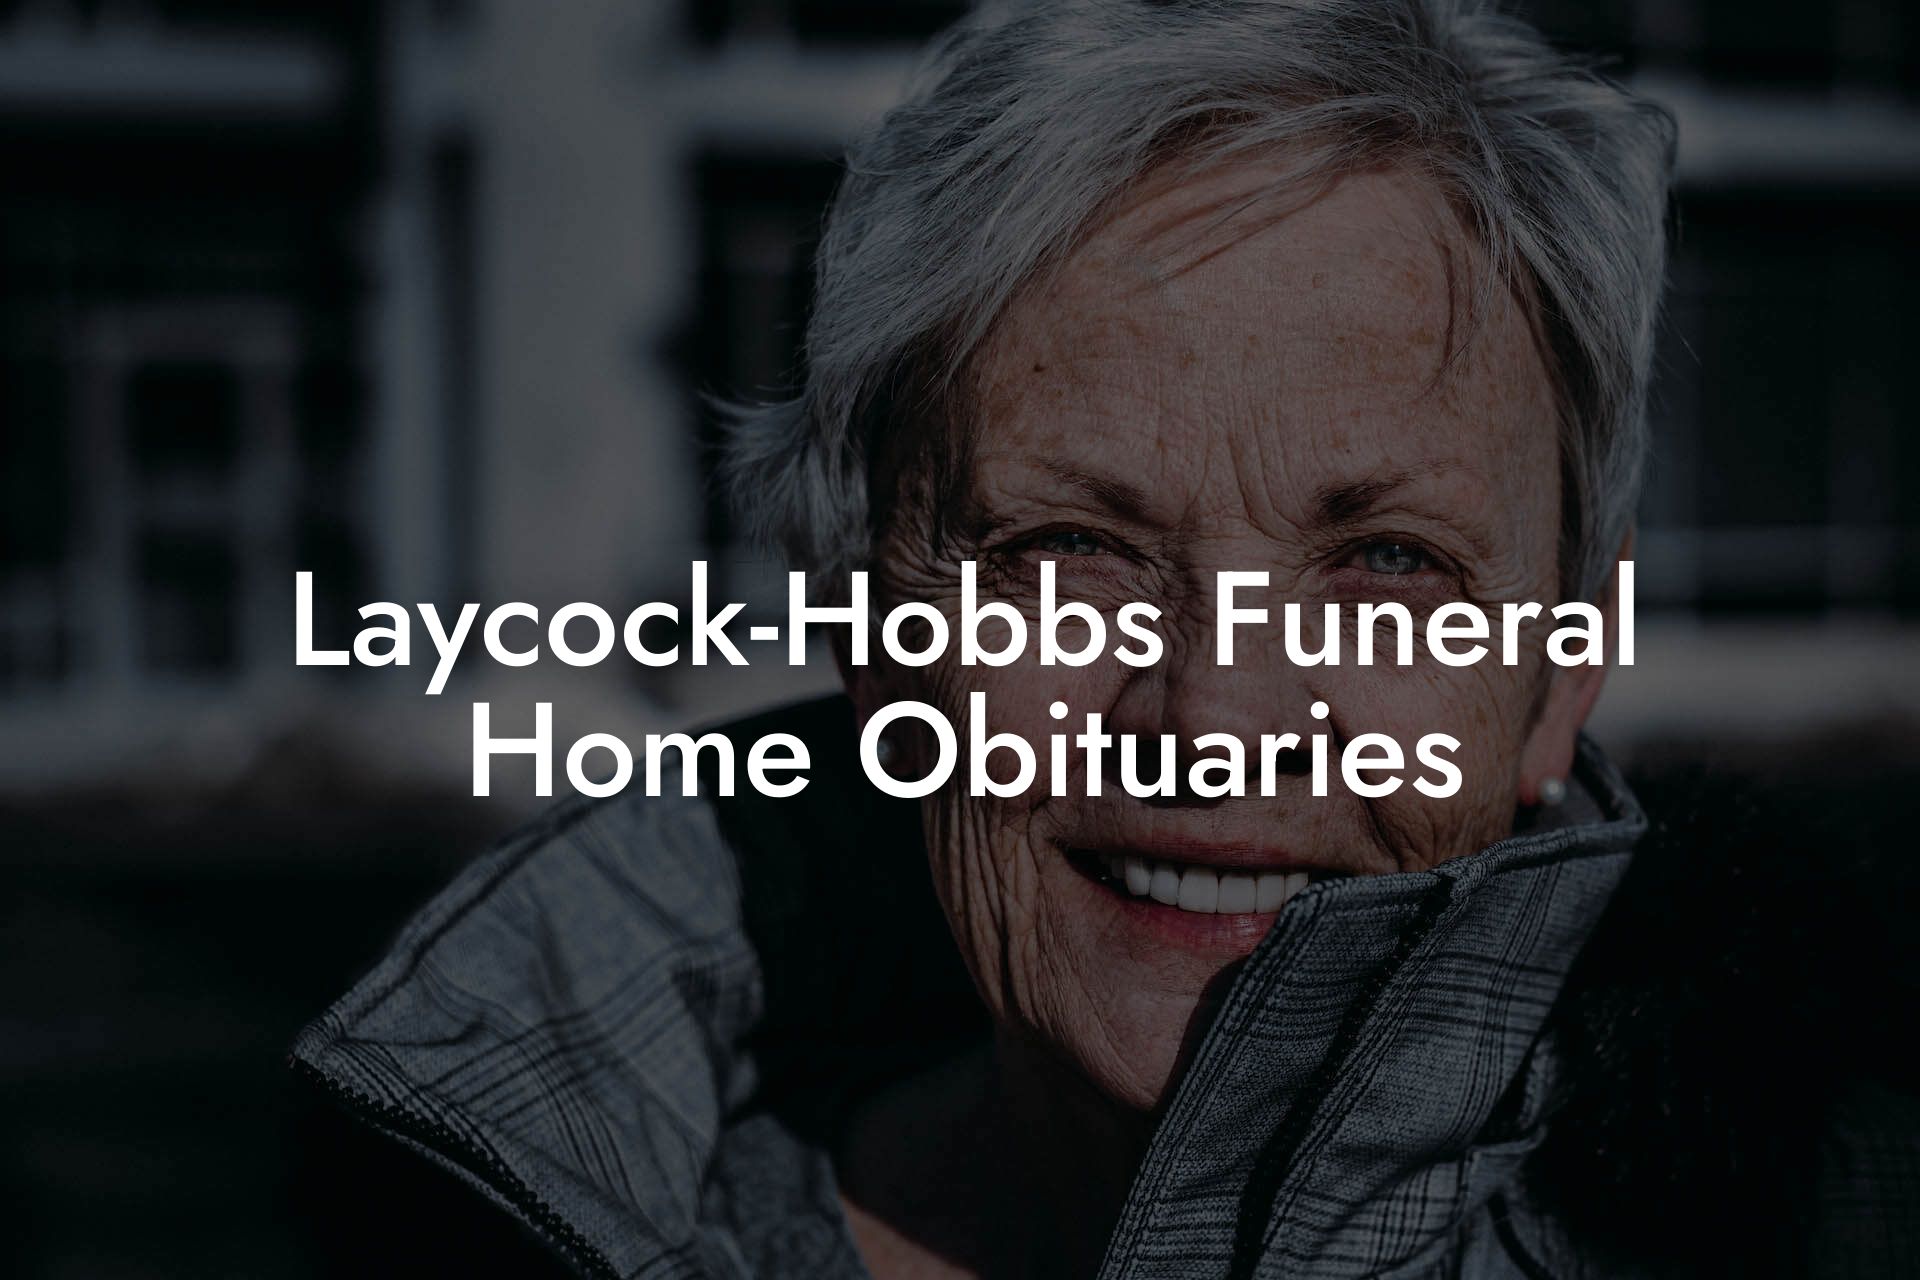 Laycock-Hobbs Funeral Home Obituaries